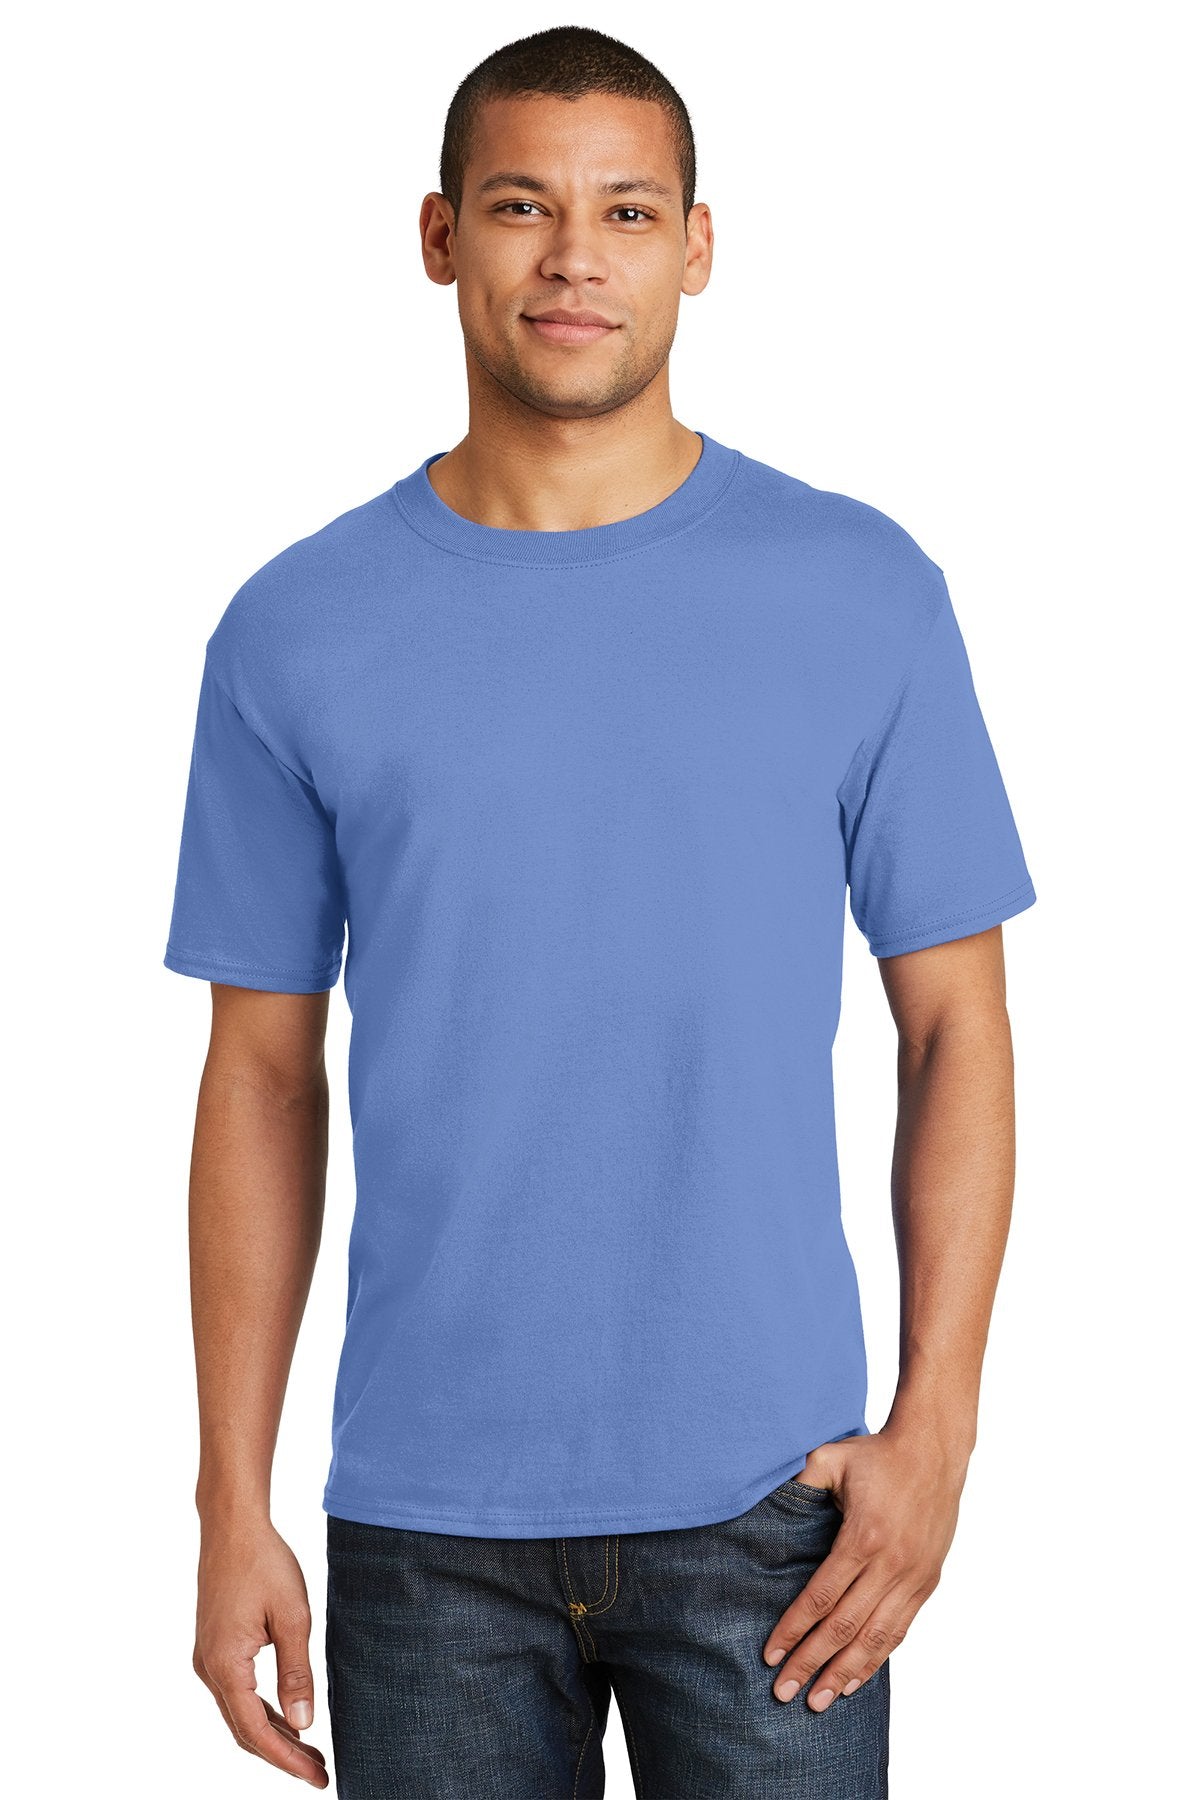 hanes beefy cotton t shirt 5180 carolina blue